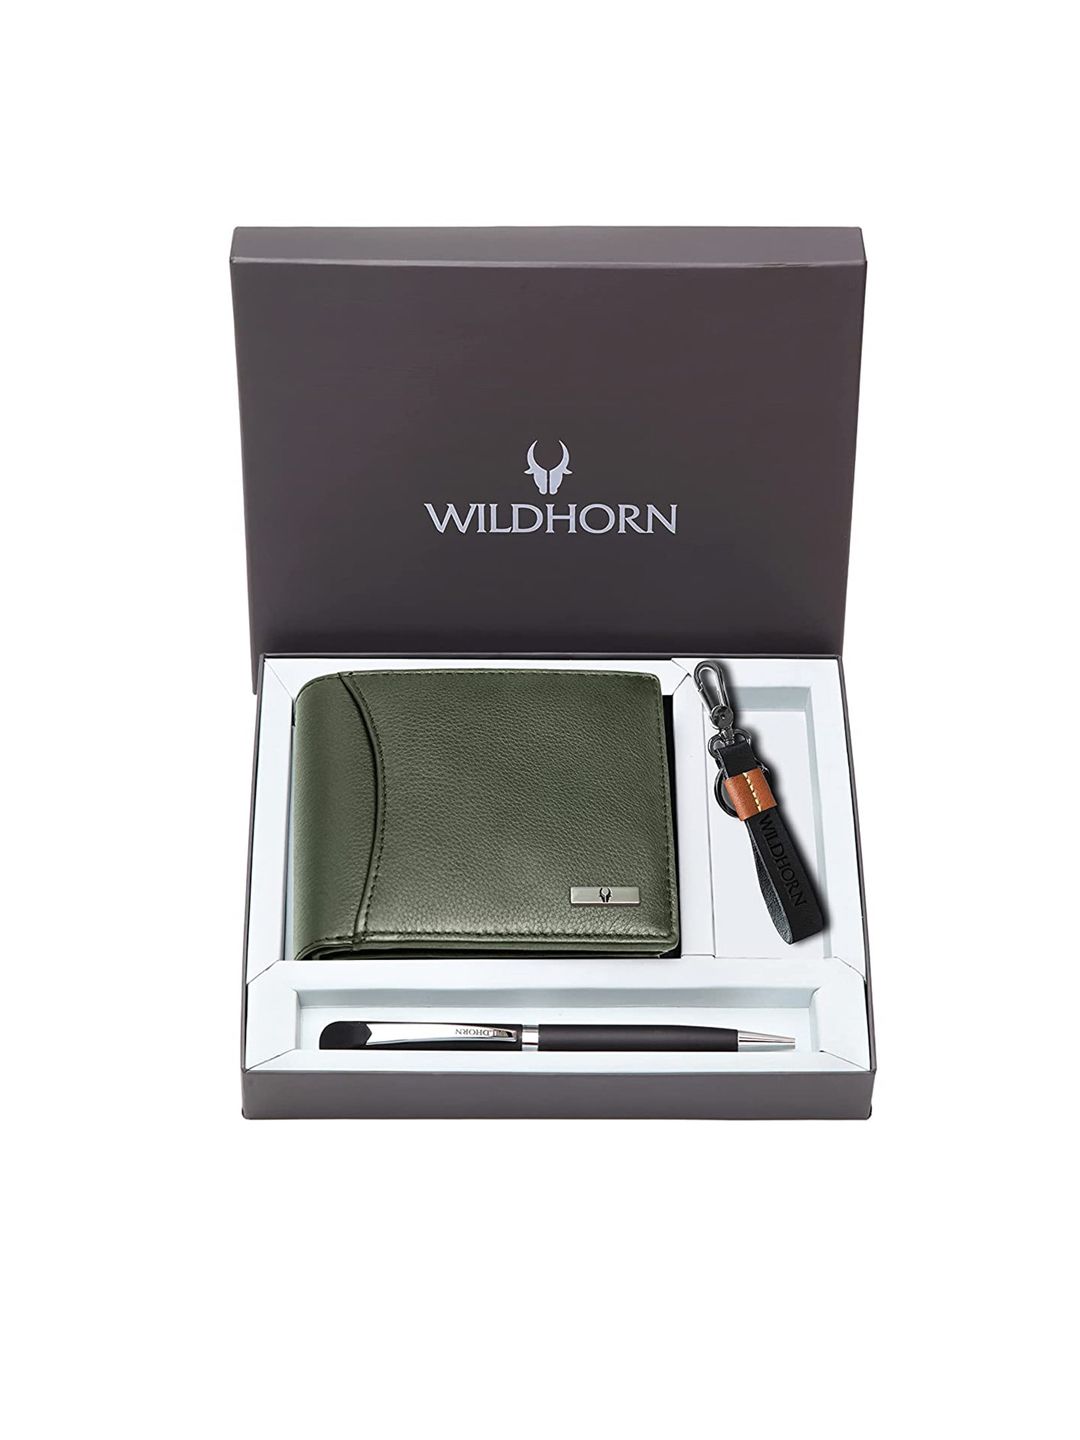 WildHorn Gift Set : Buy WILDHORN Premium Leather Ladies Wallet